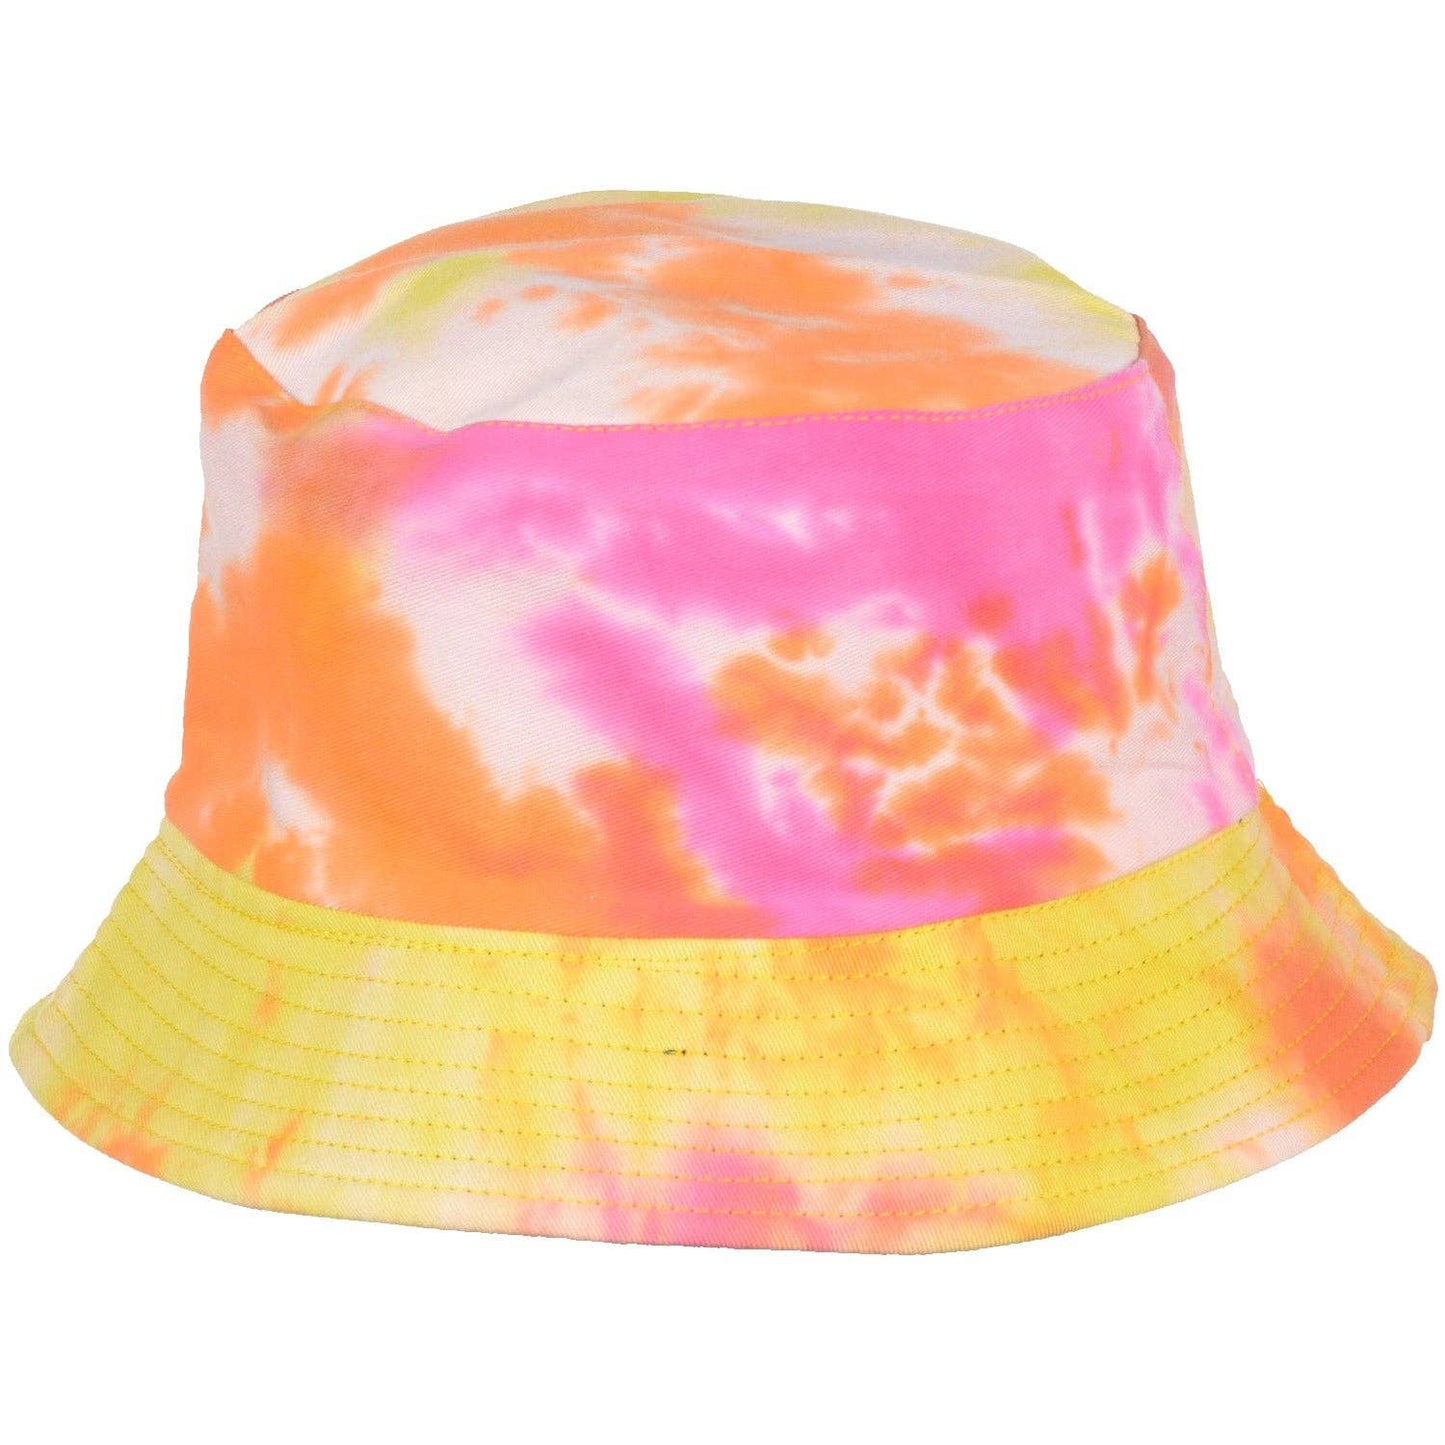 Tie-Dye Bucket Hat in Pink and Orange '90s Style Retro Gen Z Aesthetic